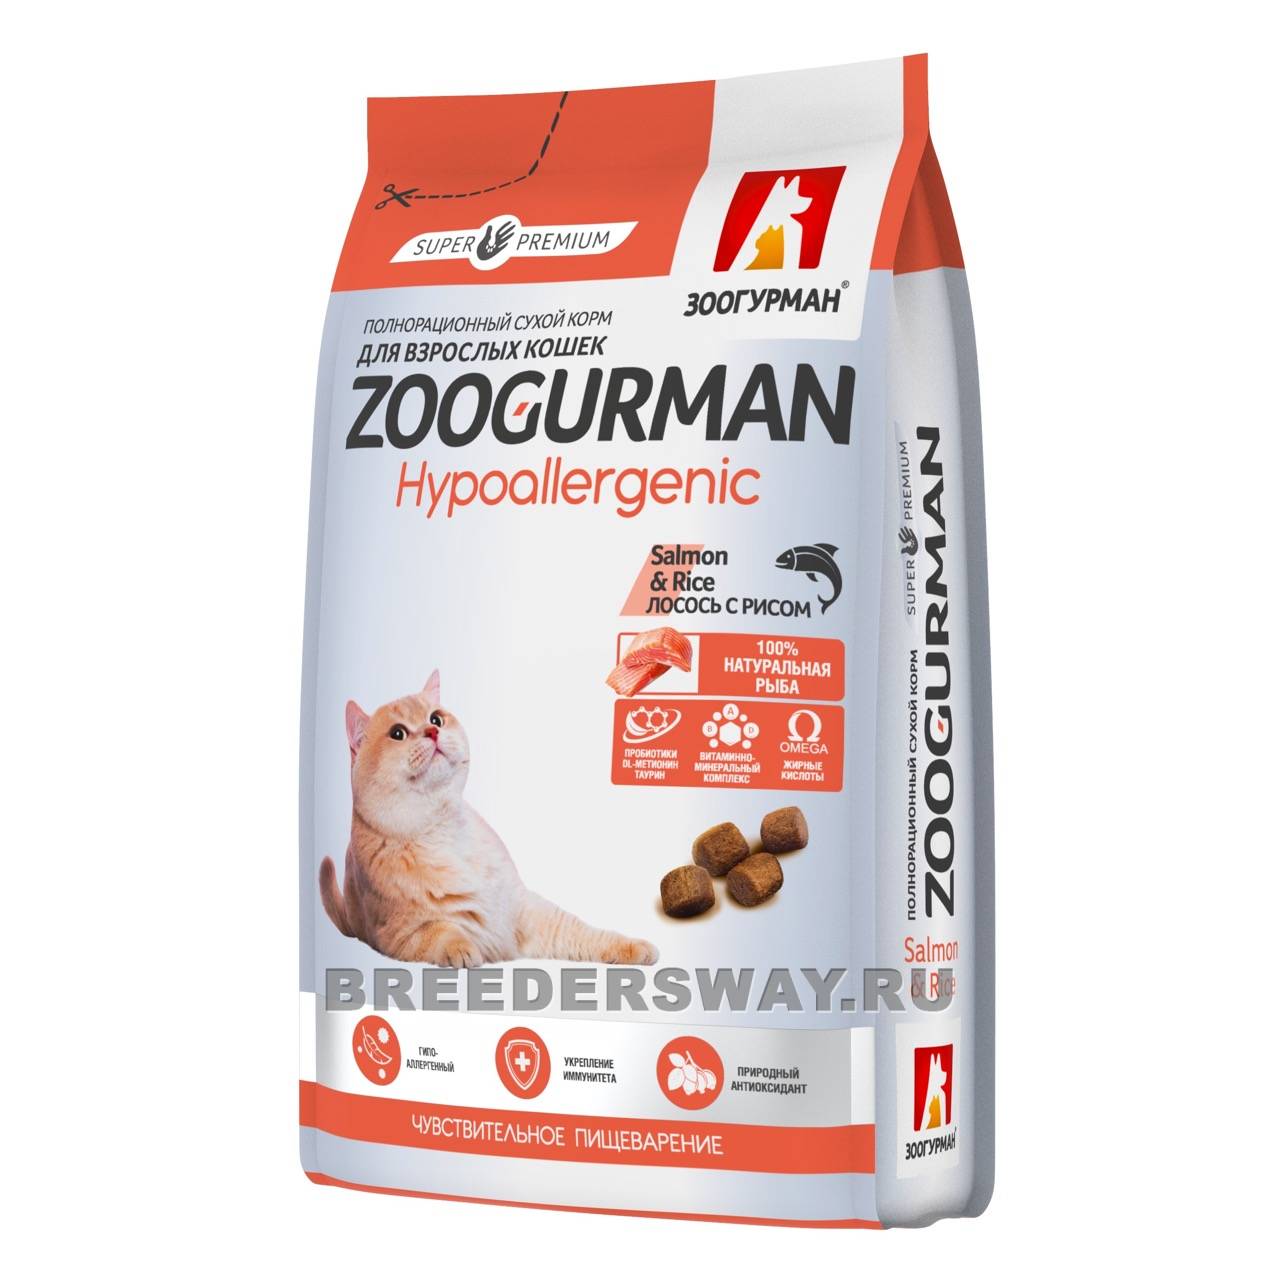 350гр Zoogurman Hypoallergenic для кошек супер-премиум Лосось с рисом 30/16 6мм